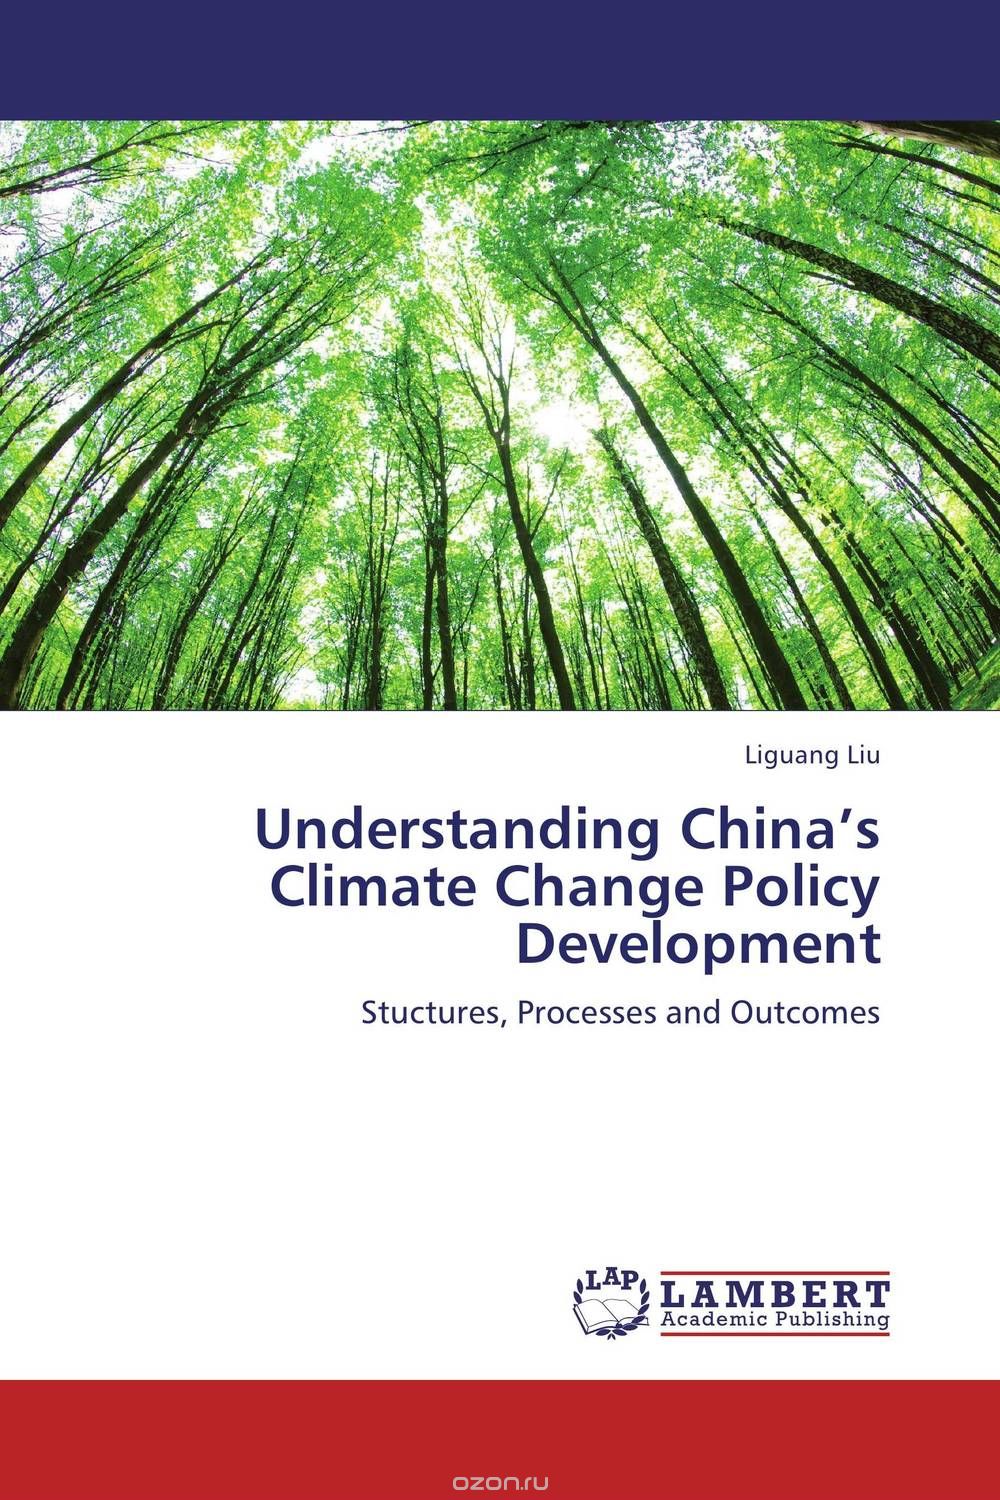 Скачать книгу "Understanding China’s Climate Change Policy Development"